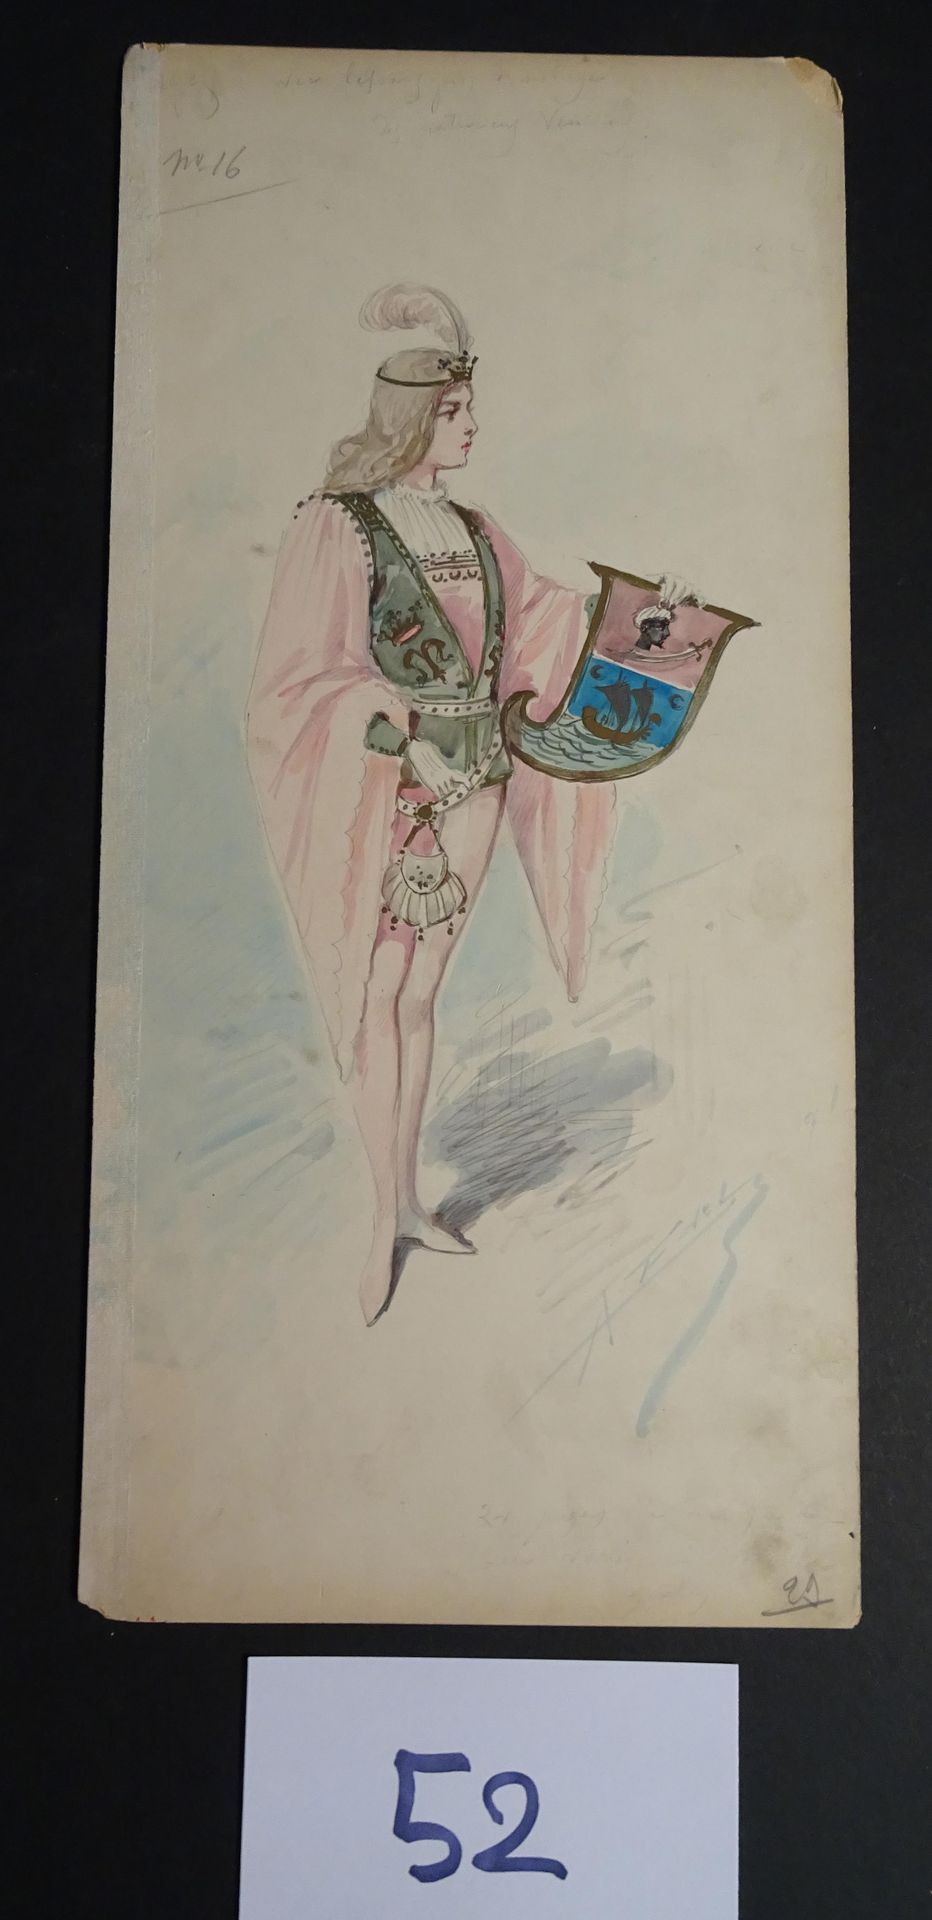 EDEL 埃德尔-阿尔弗雷多(1859-1912)

"页面"。水粉，水彩和墨水，有签名，约1890年，43 x 20厘米。